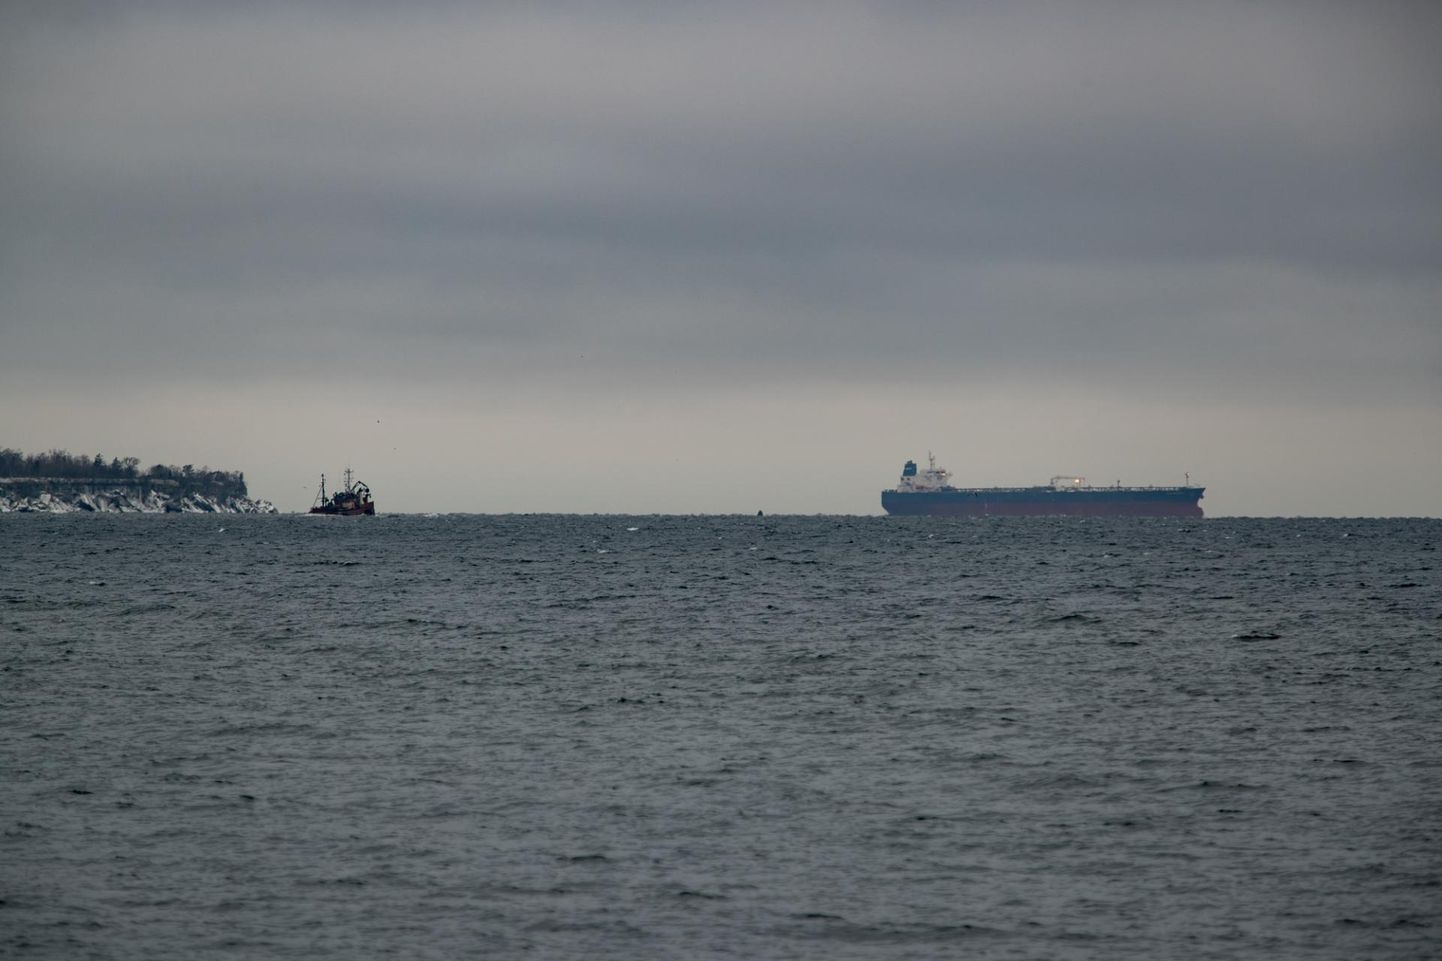 Нефтетанкер "Залив Амурский" возле полустрова Пакри